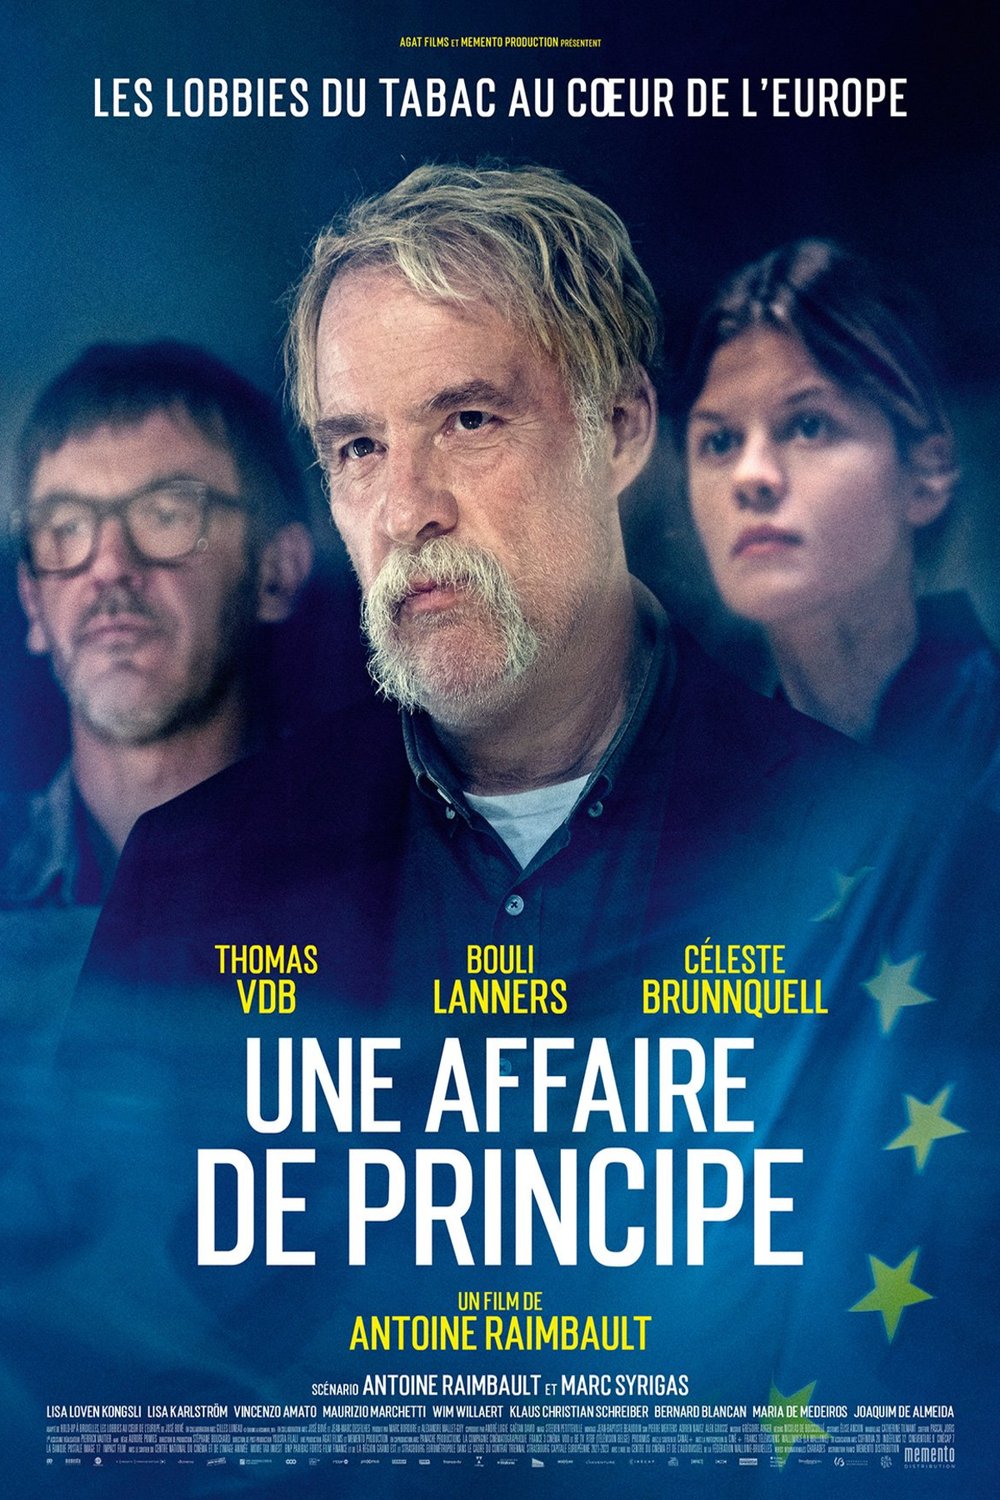 Poster of the movie Une Affaire de Principe